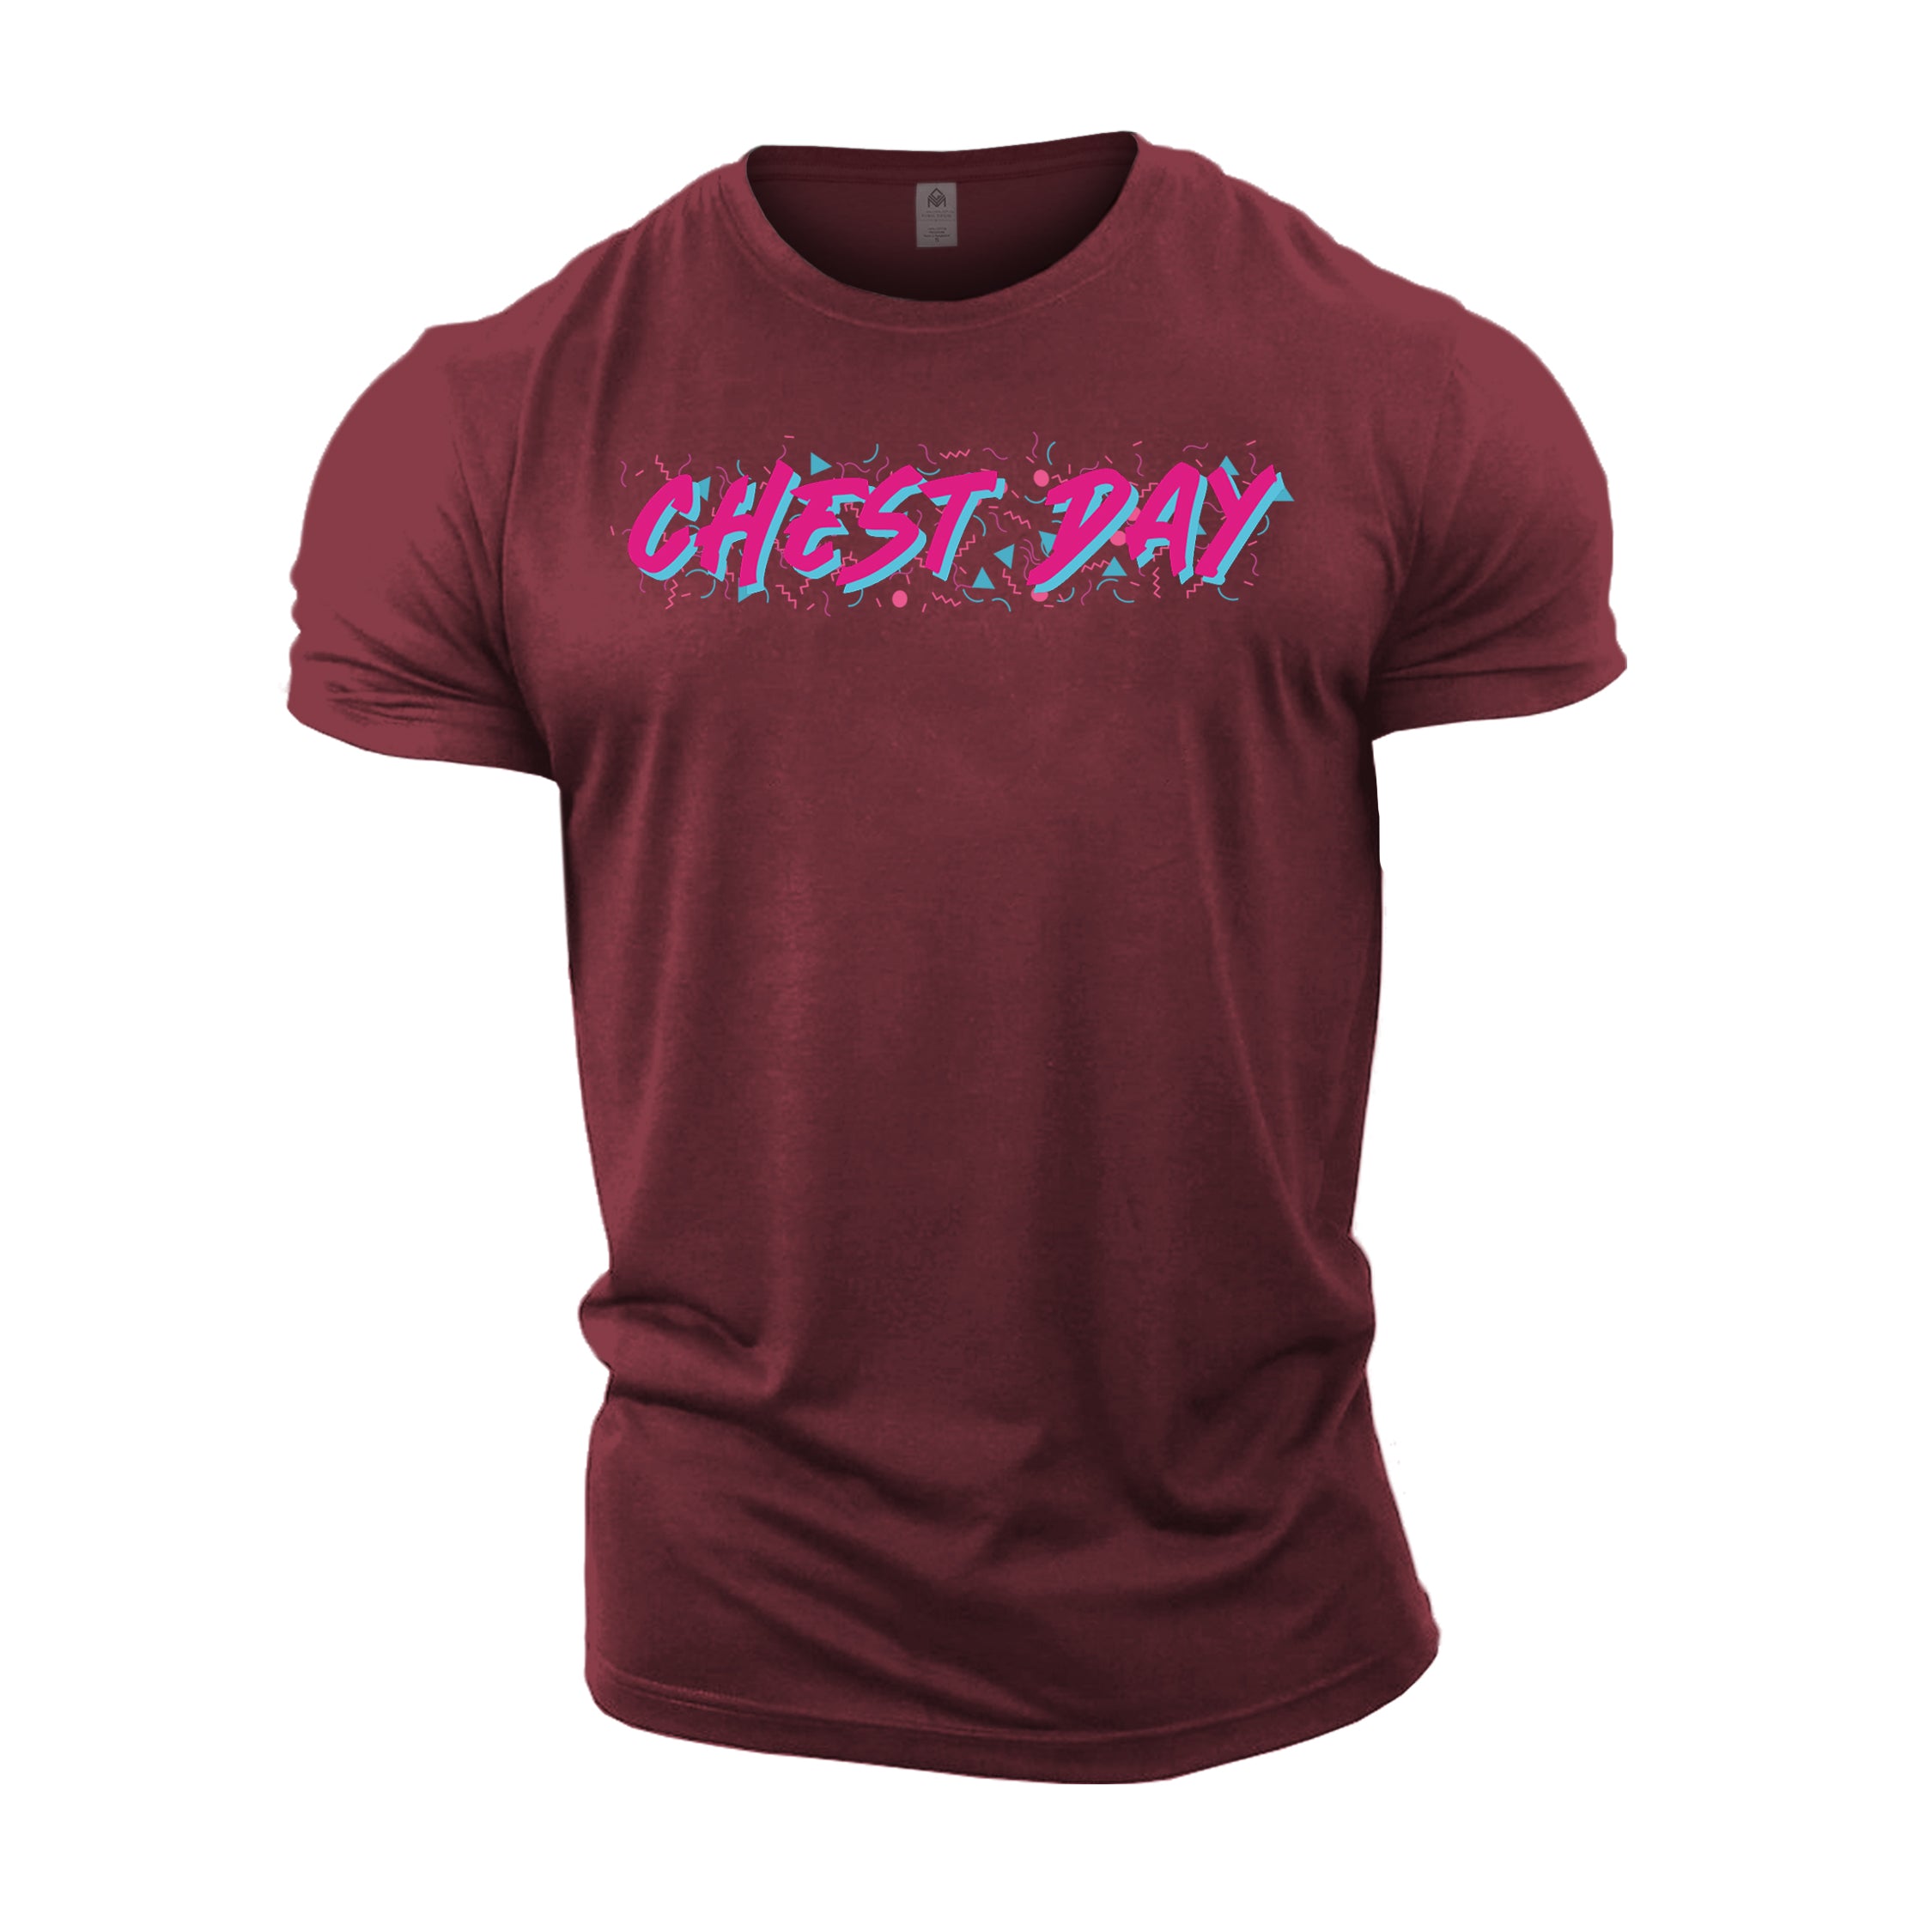 Retro Chest Day - Gym T-Shirt